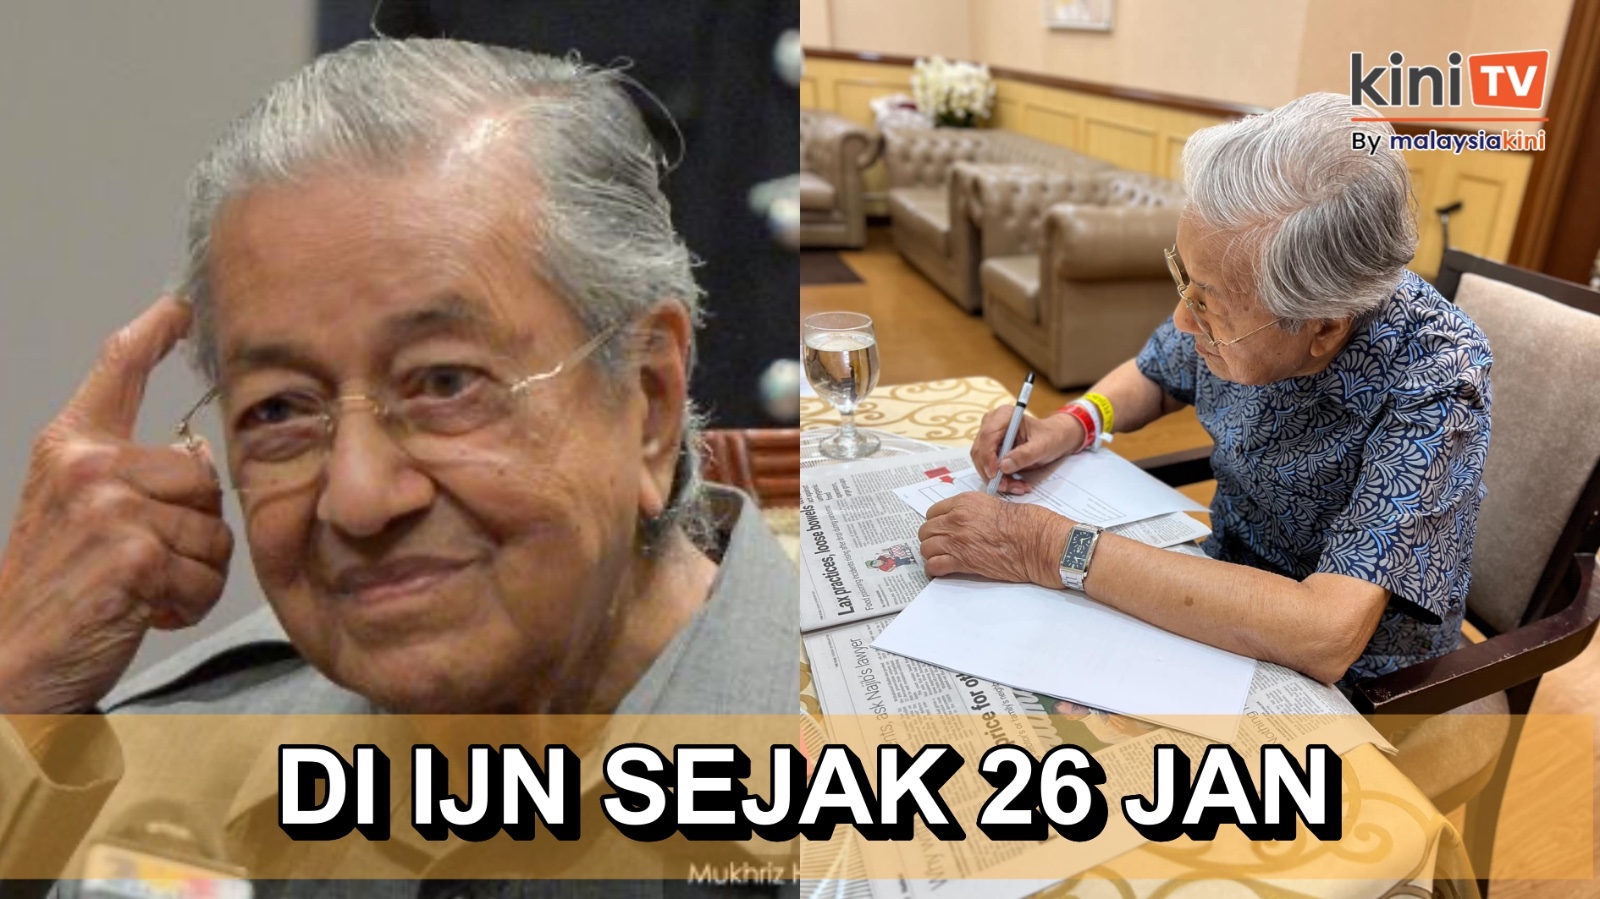 Mahathir masih dalam proses pemulihan di IJN - Pembantu